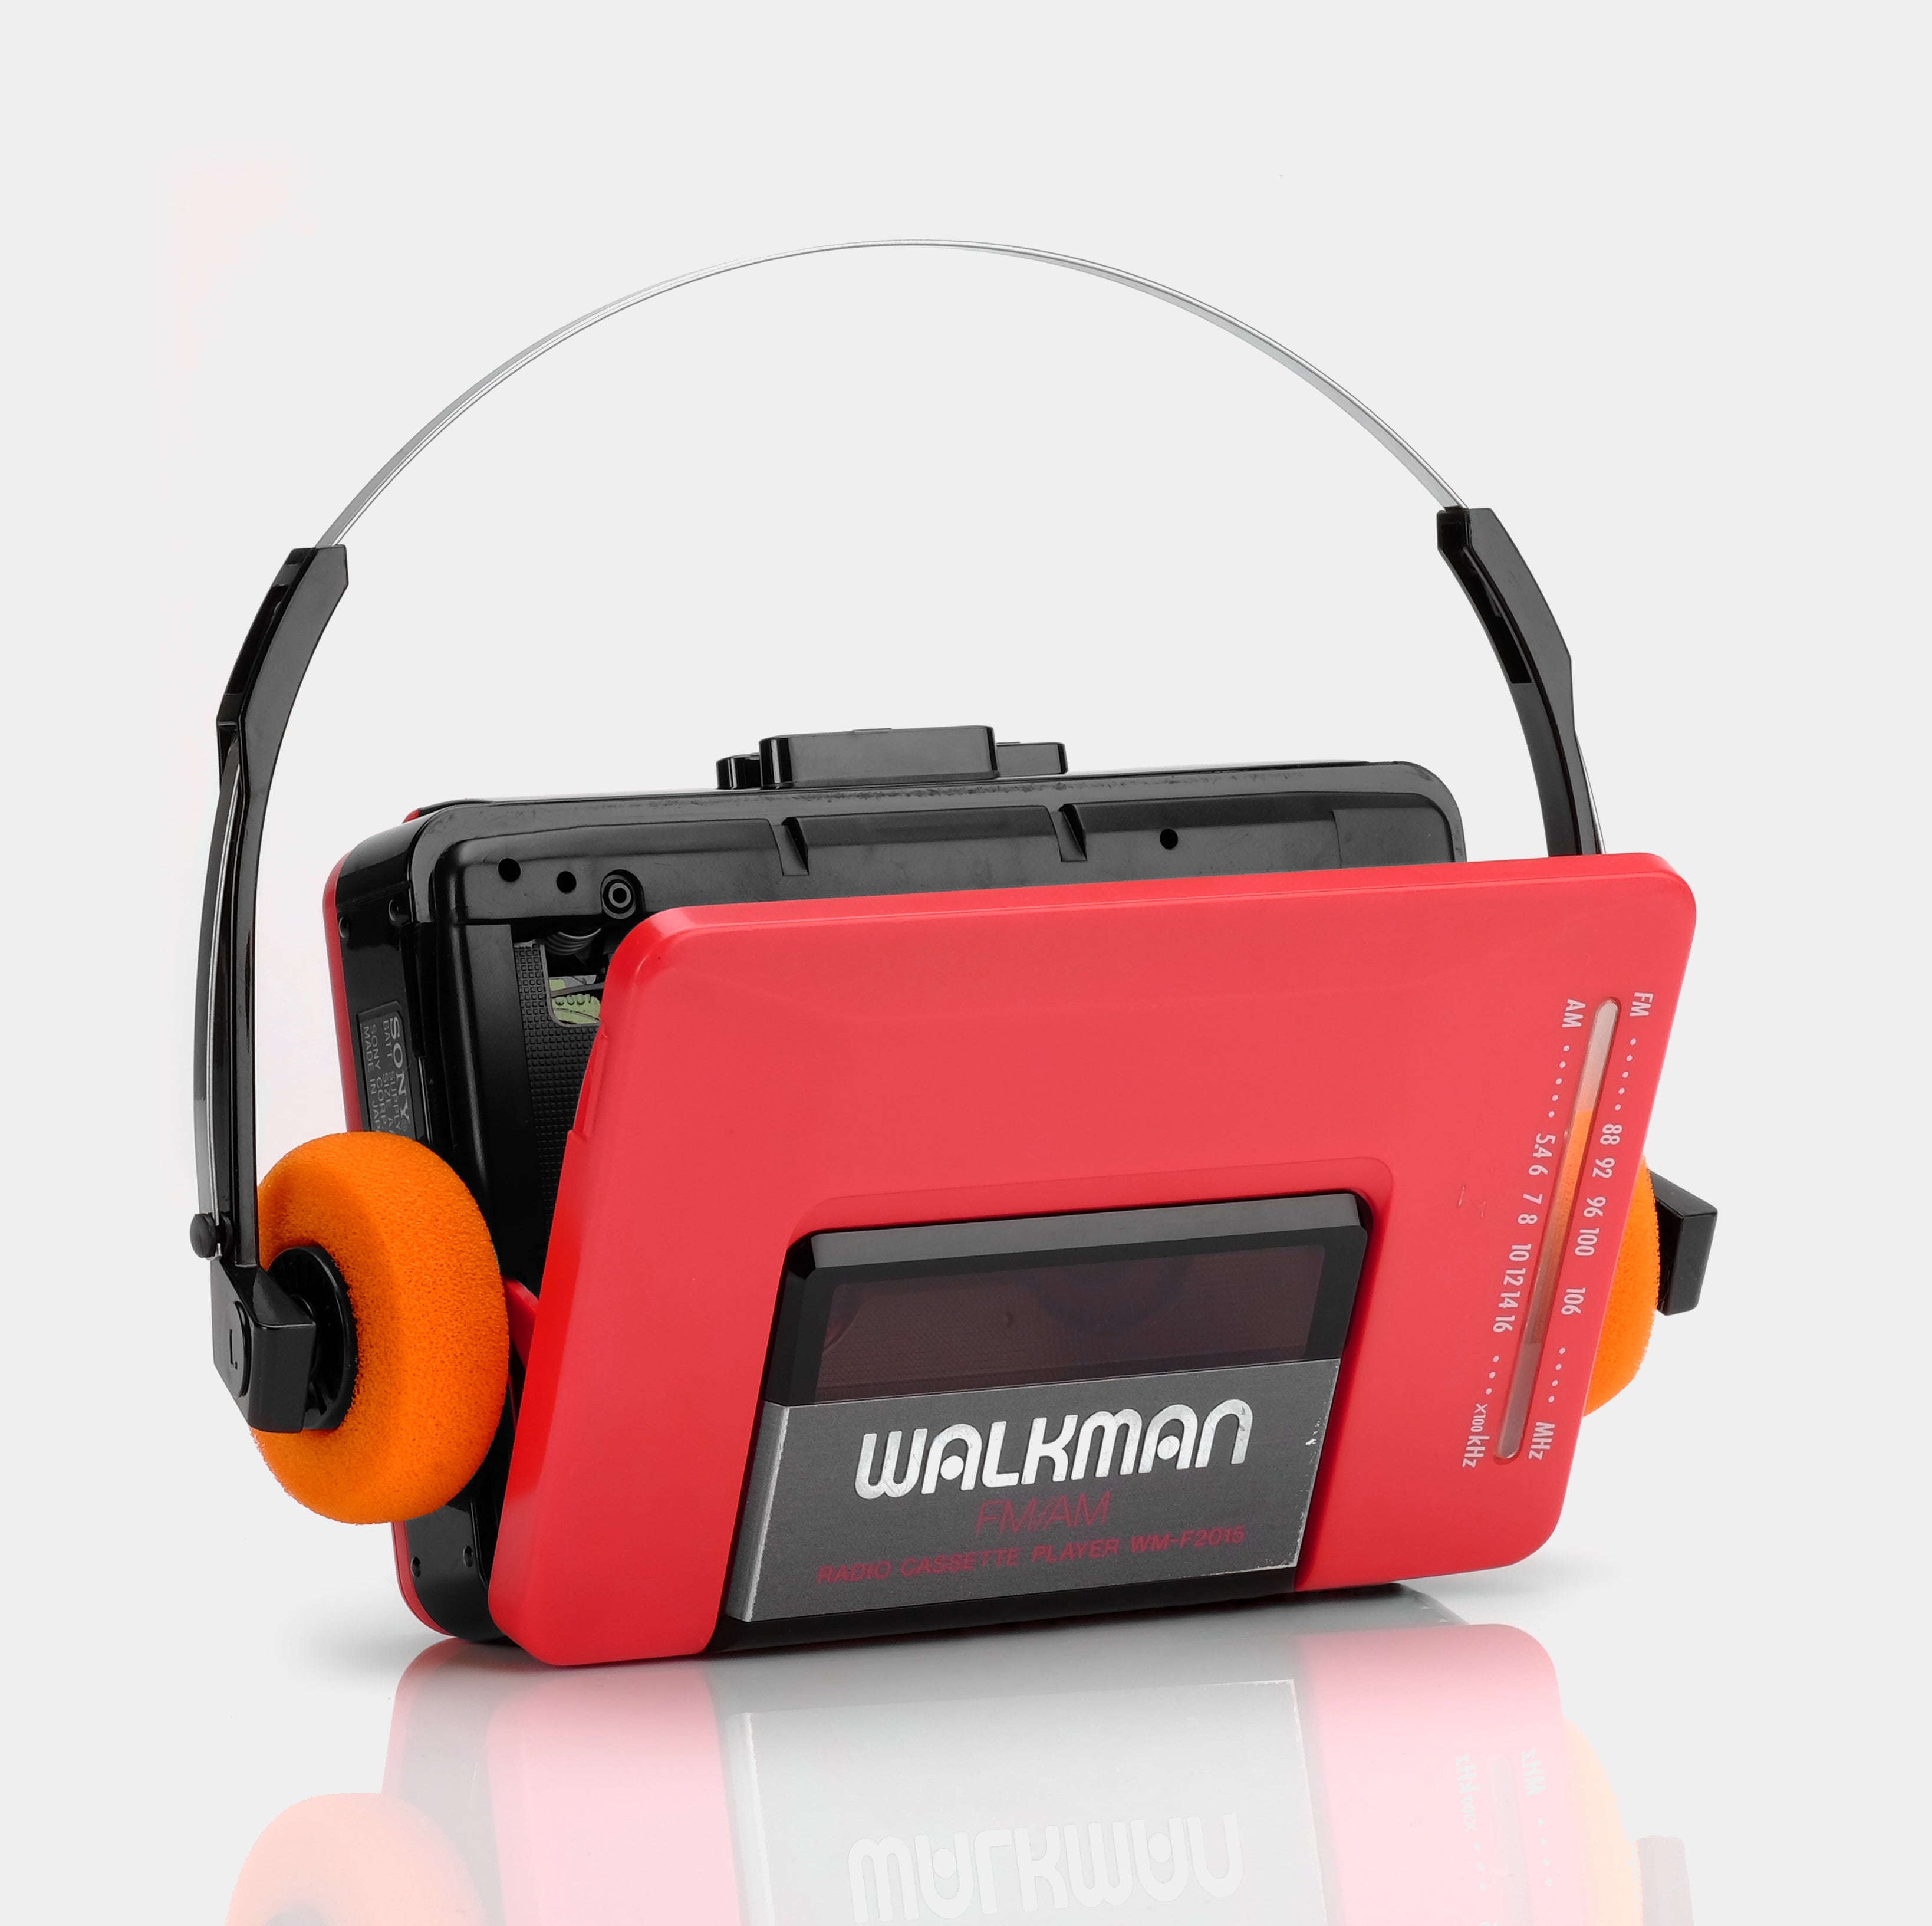 Sony Walkman WM-F2015 Red Portable Cassette Player